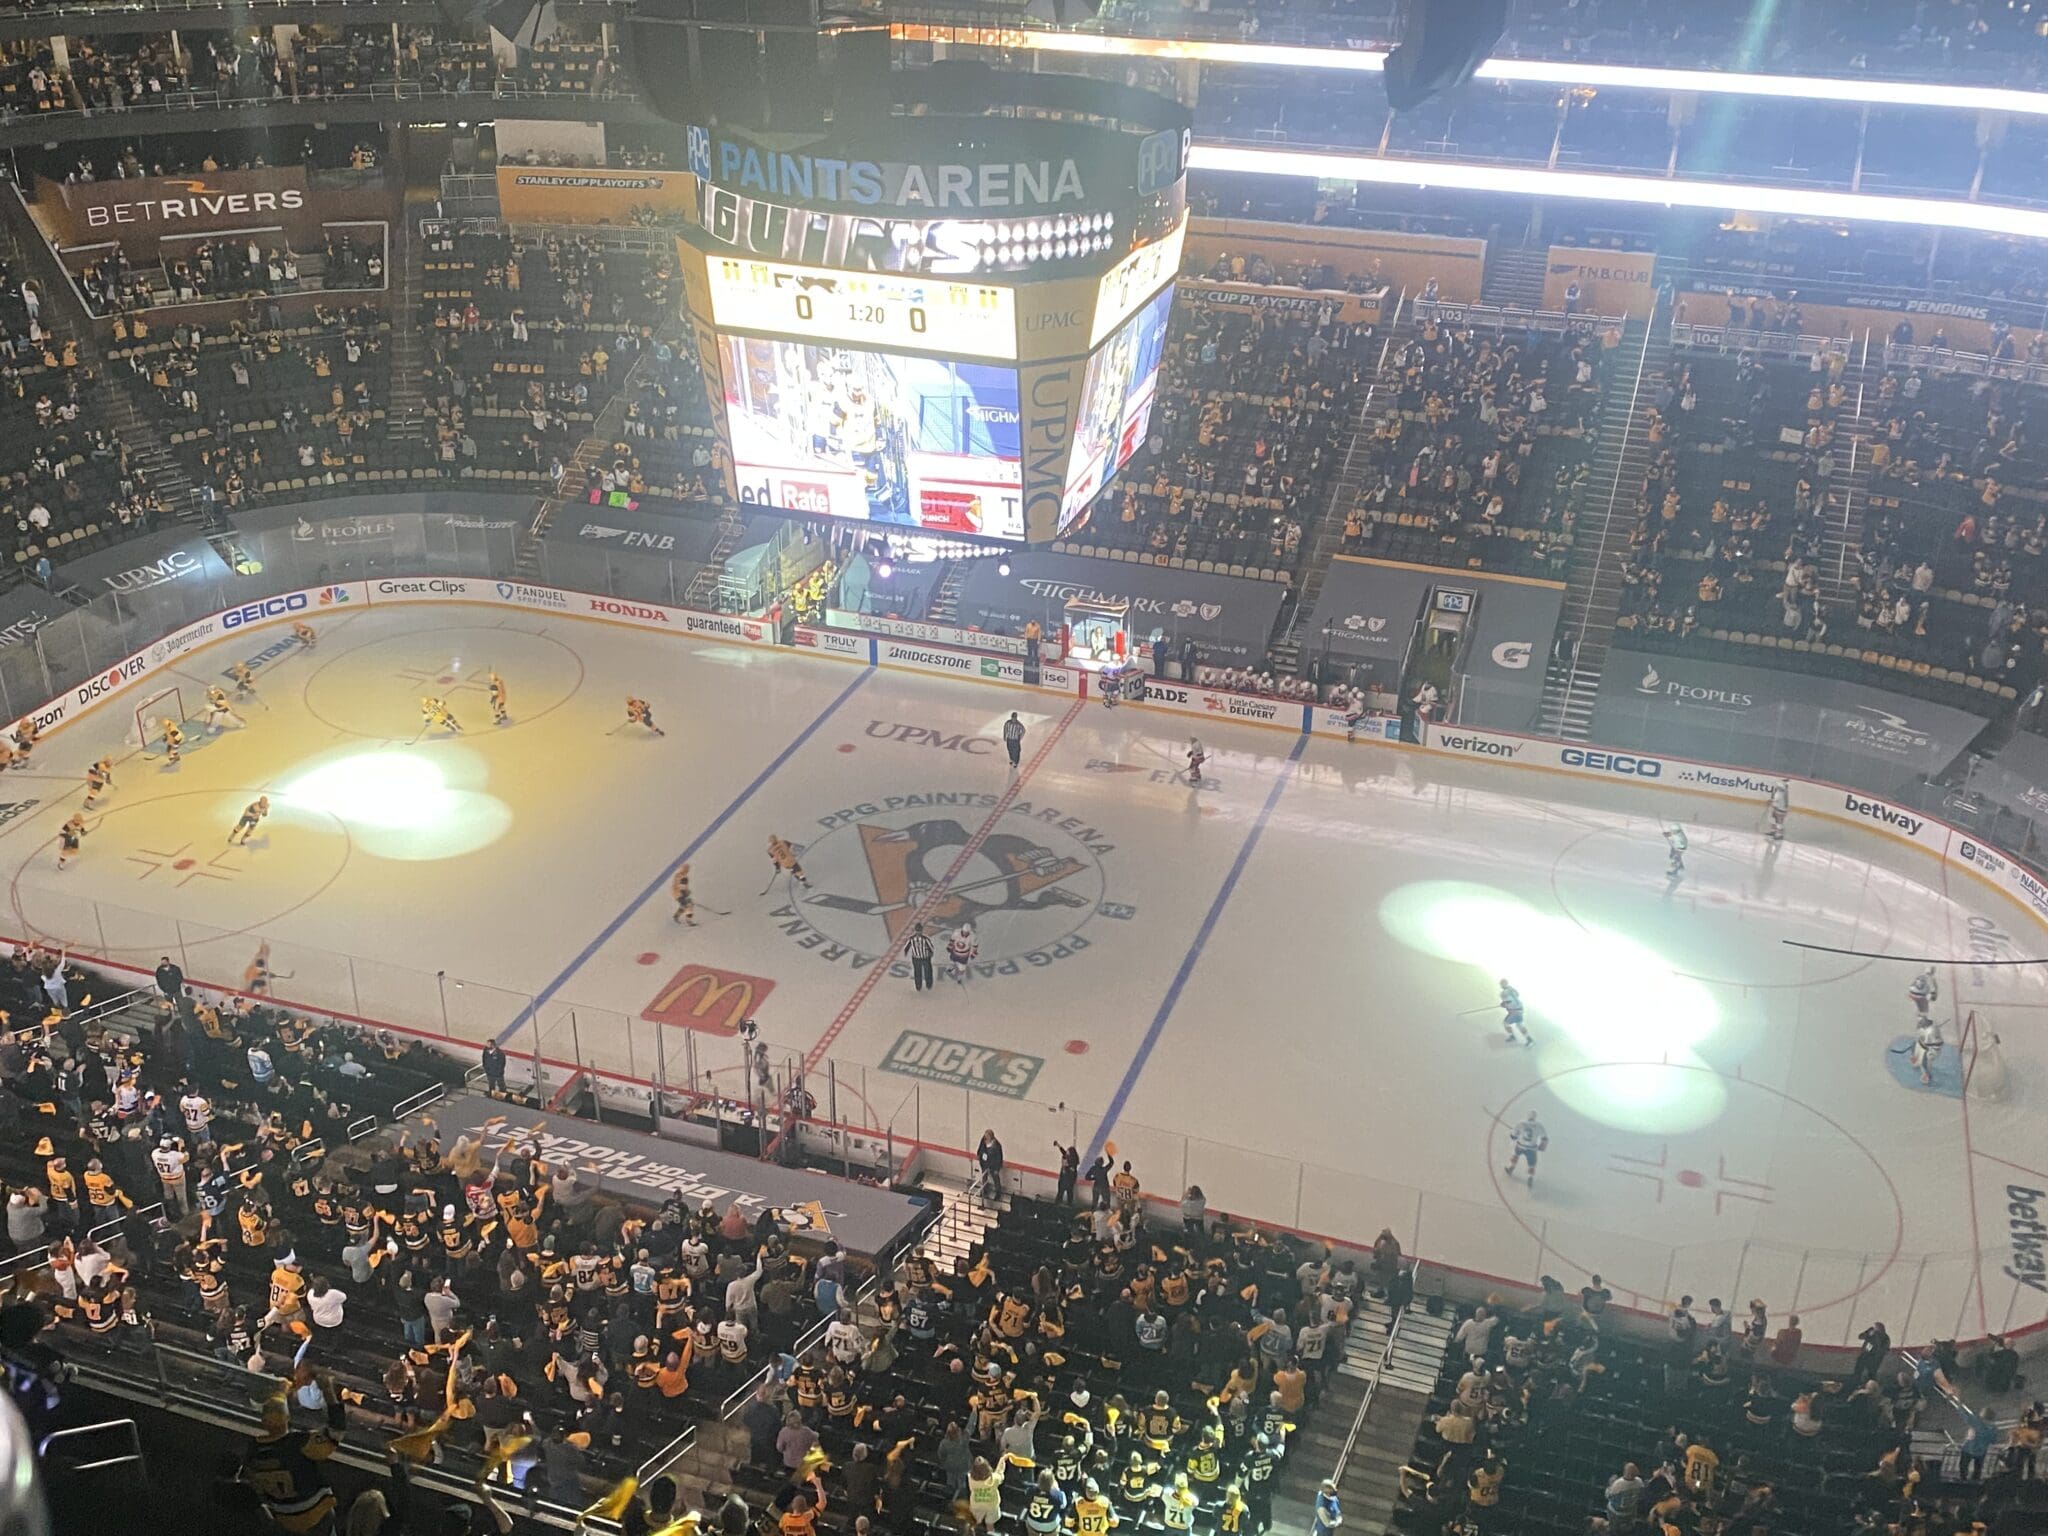 Pittsburgh Penguins fans